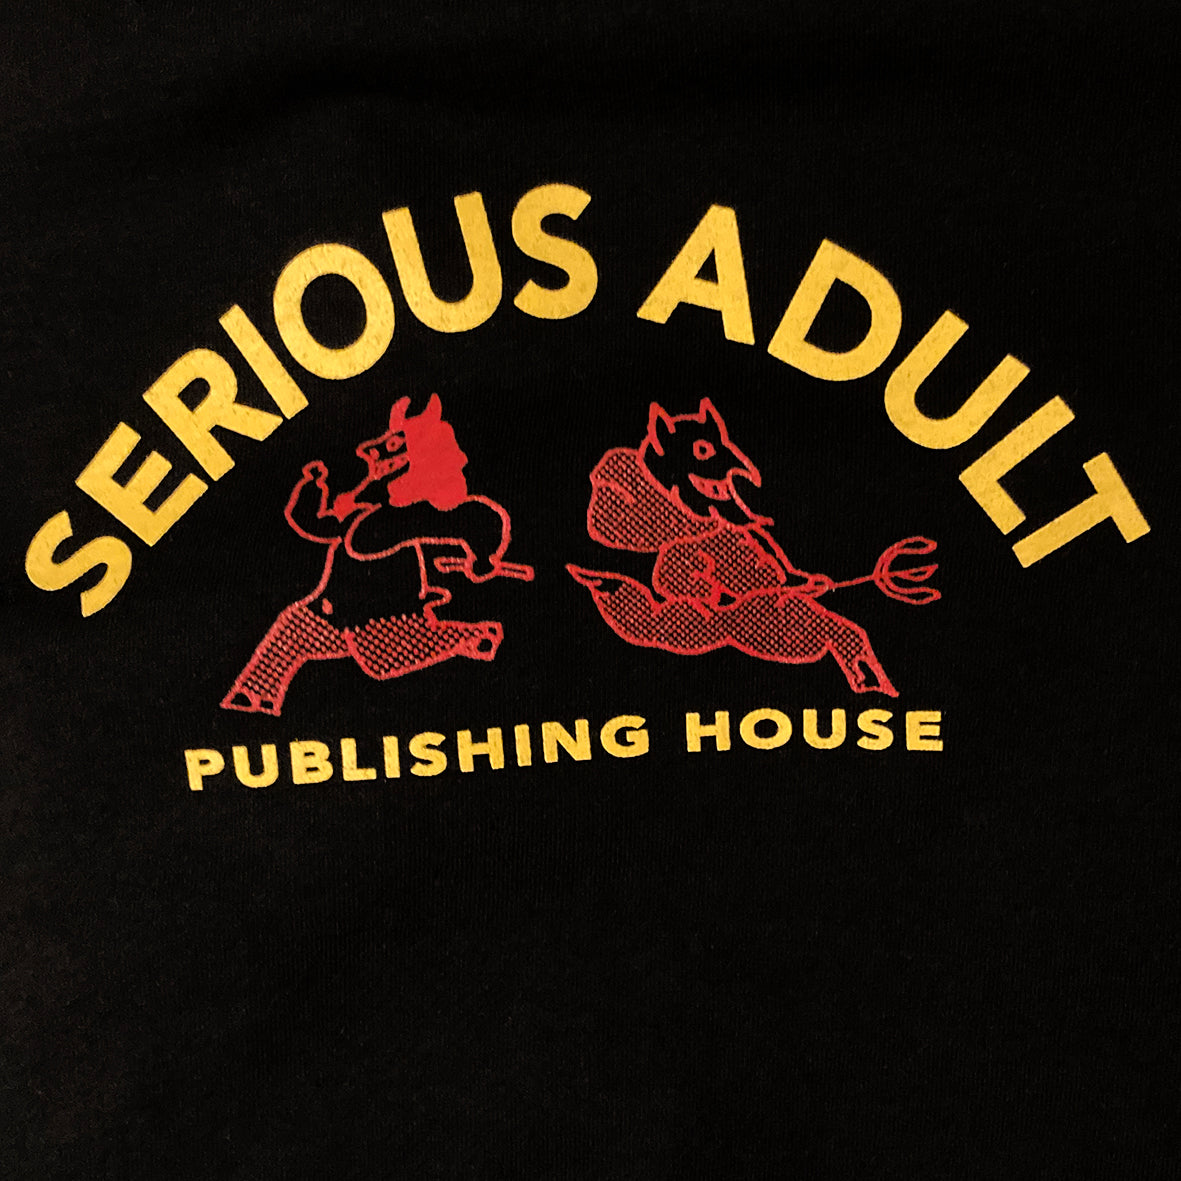 Serious Adult 'Hoofs' Long Sleeve T-shirt - Black